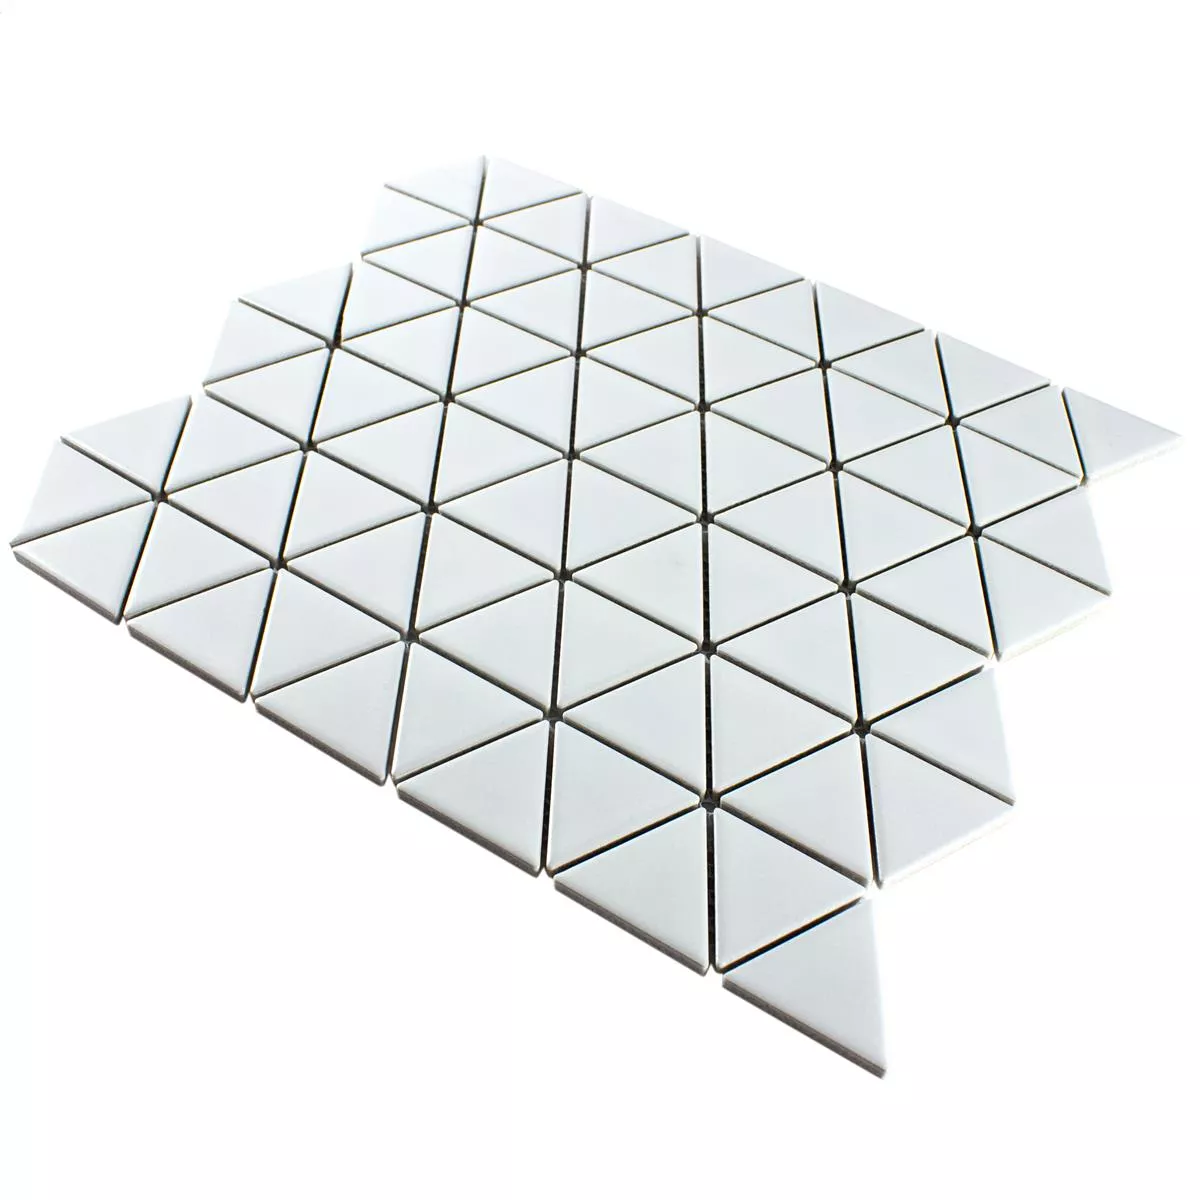 Sample Ceramic Mosaic Tiles Arvada Triangle Blanc Glossy